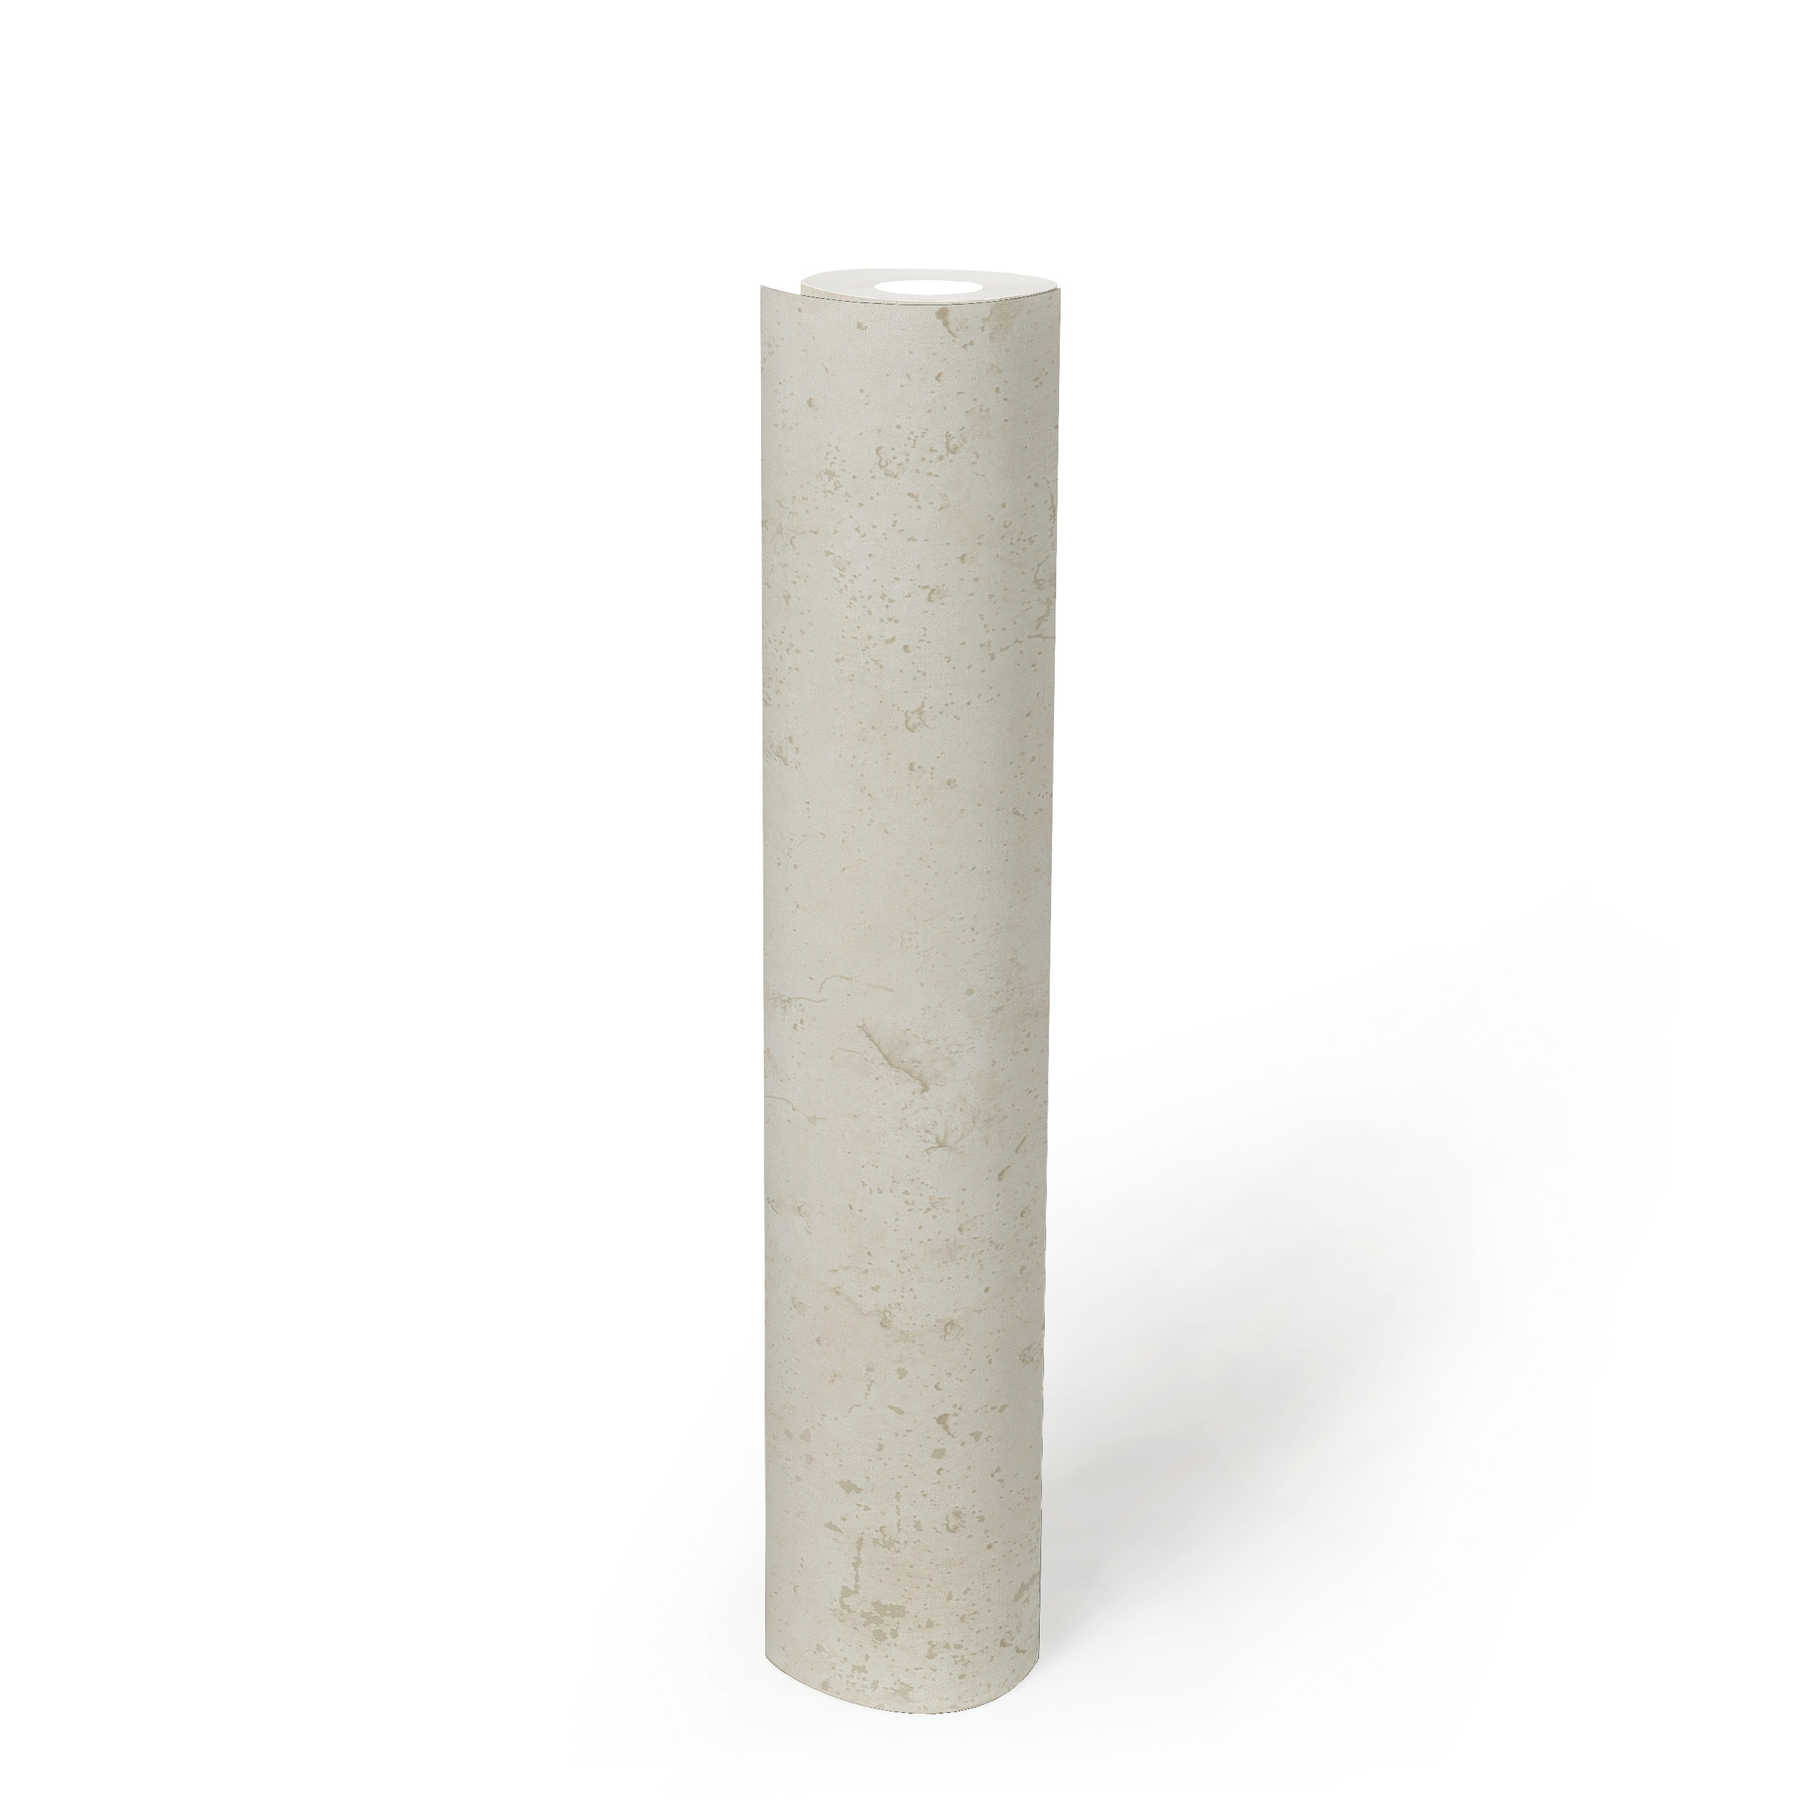             Betontapete im Industrial Style – Creme, Weiß
        